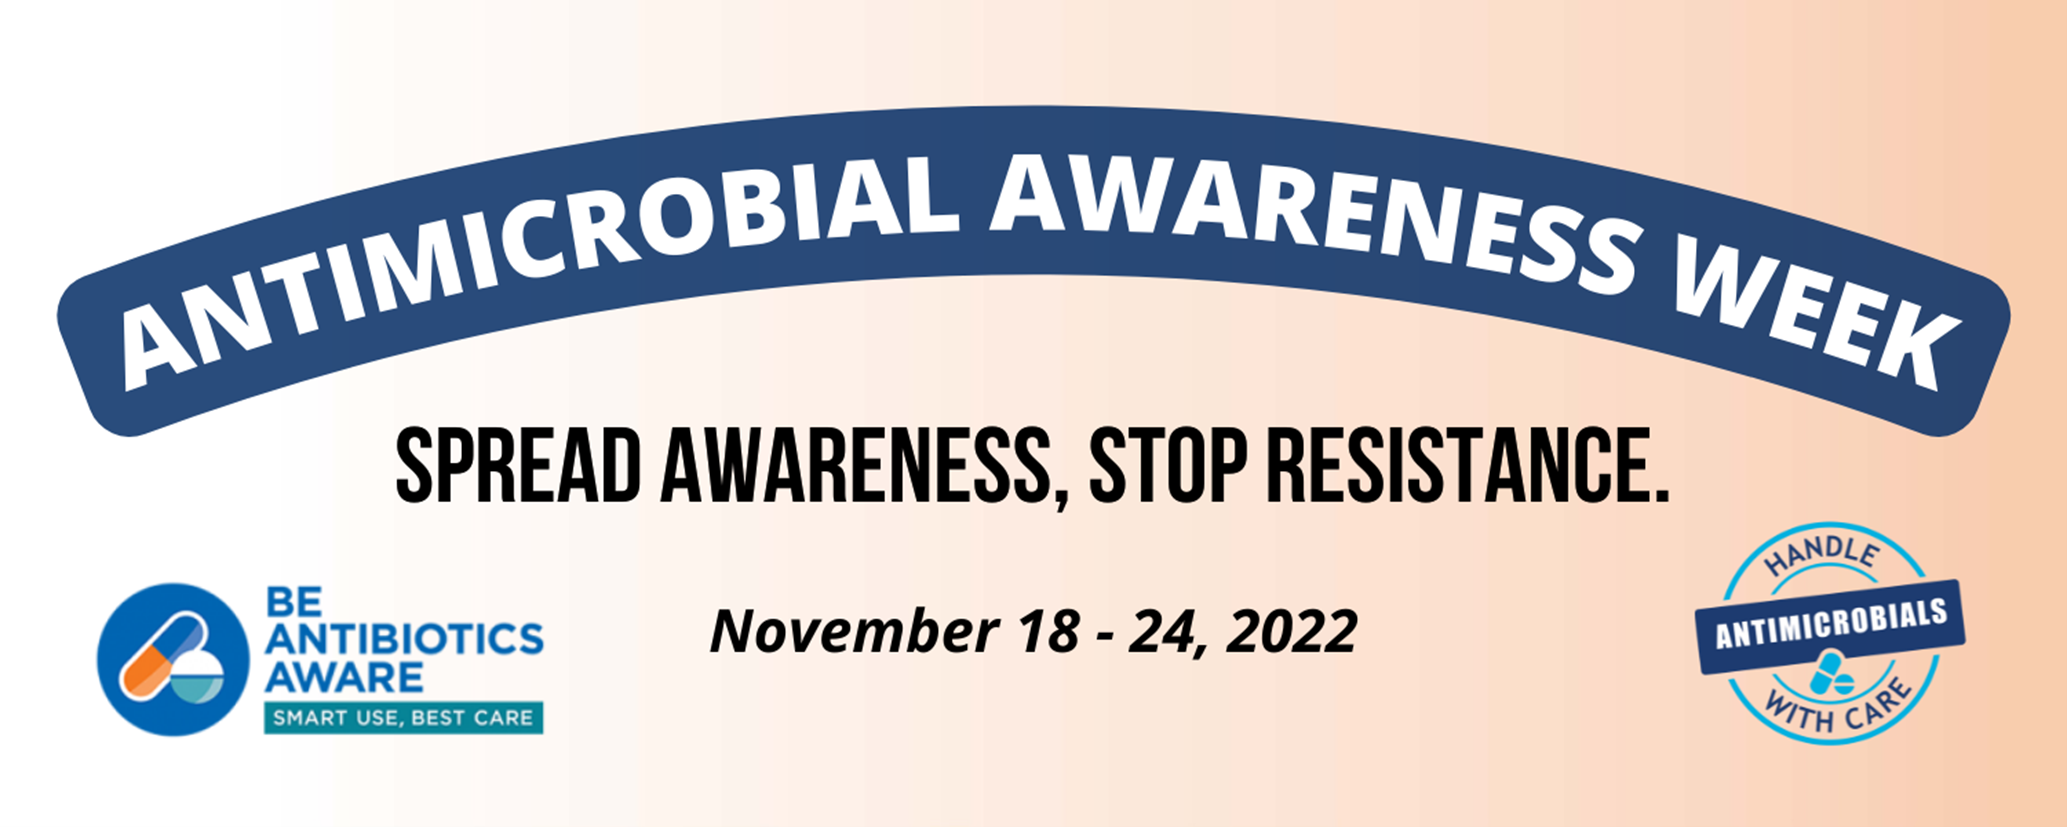 ABX Awareness Nov 18-24, 2022 Spread Awareness Not Resistance CDC logo